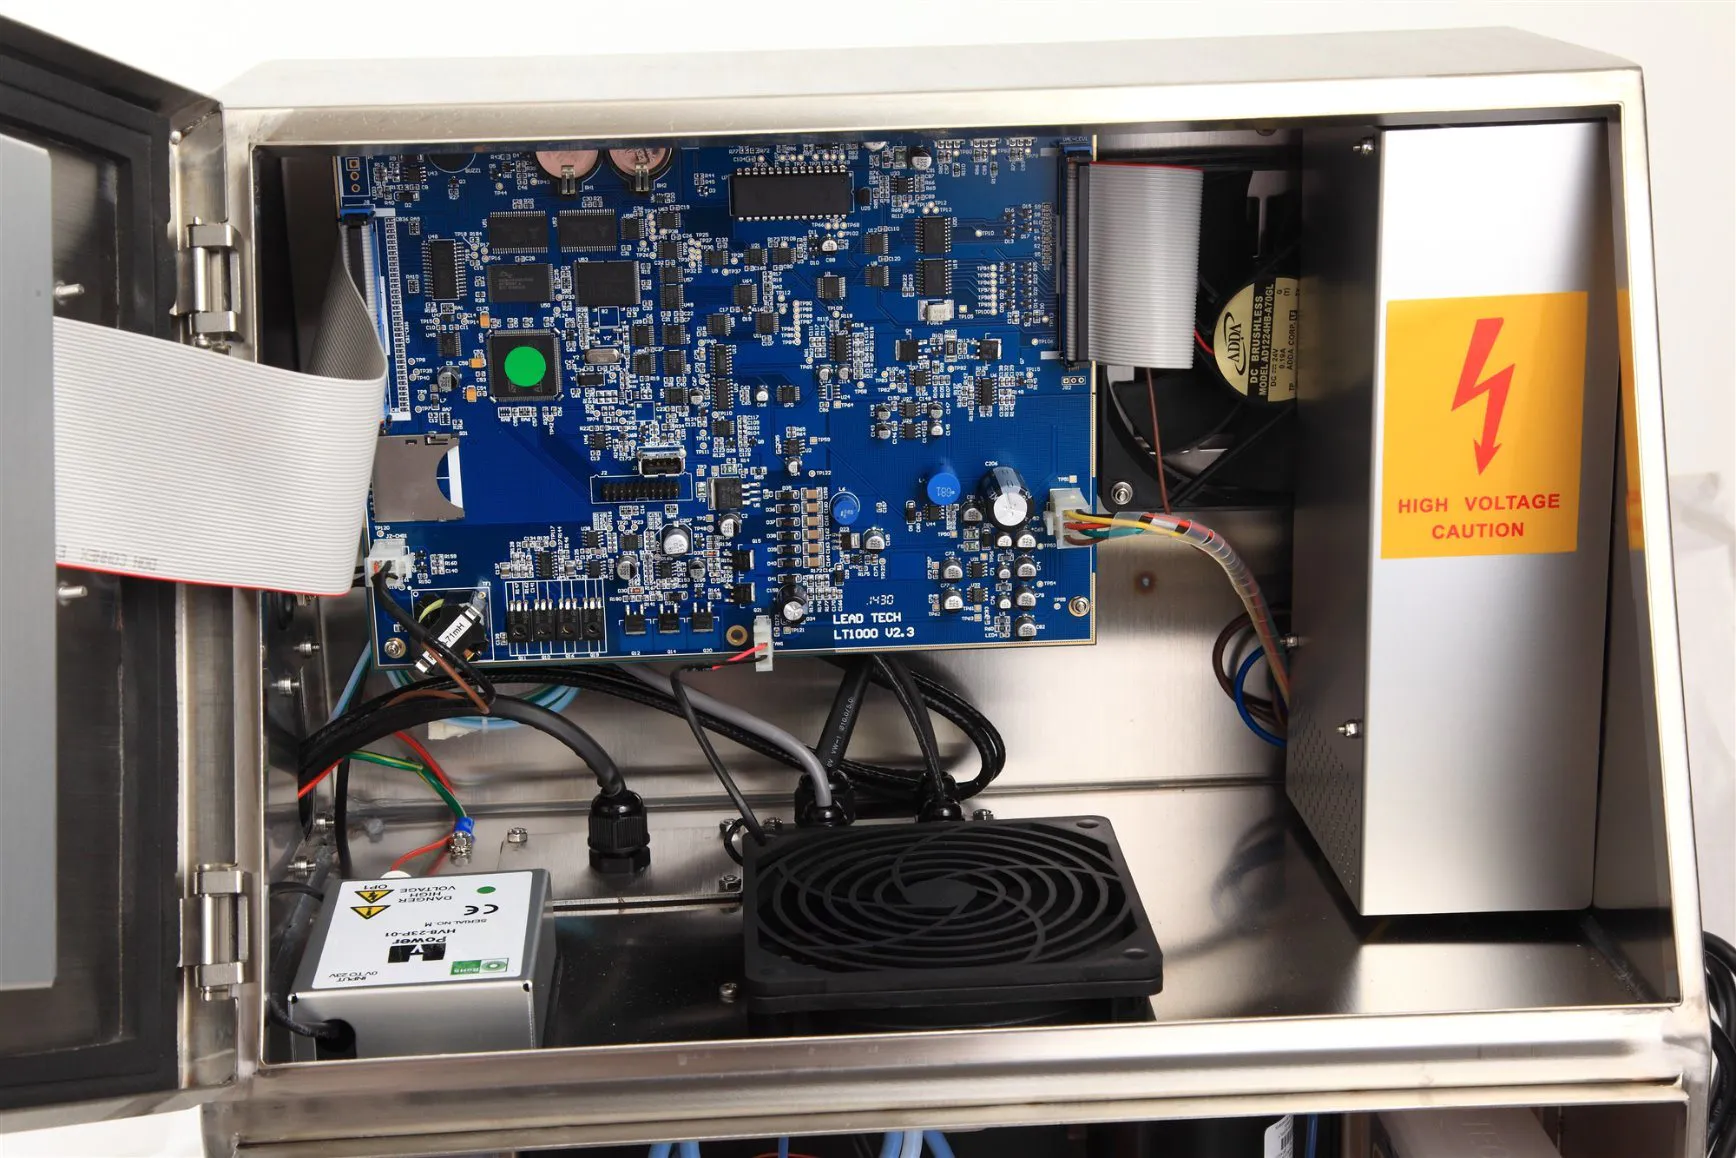 Lead Tech Lt1000s+ Plastic Film Cij Inkjet Printer